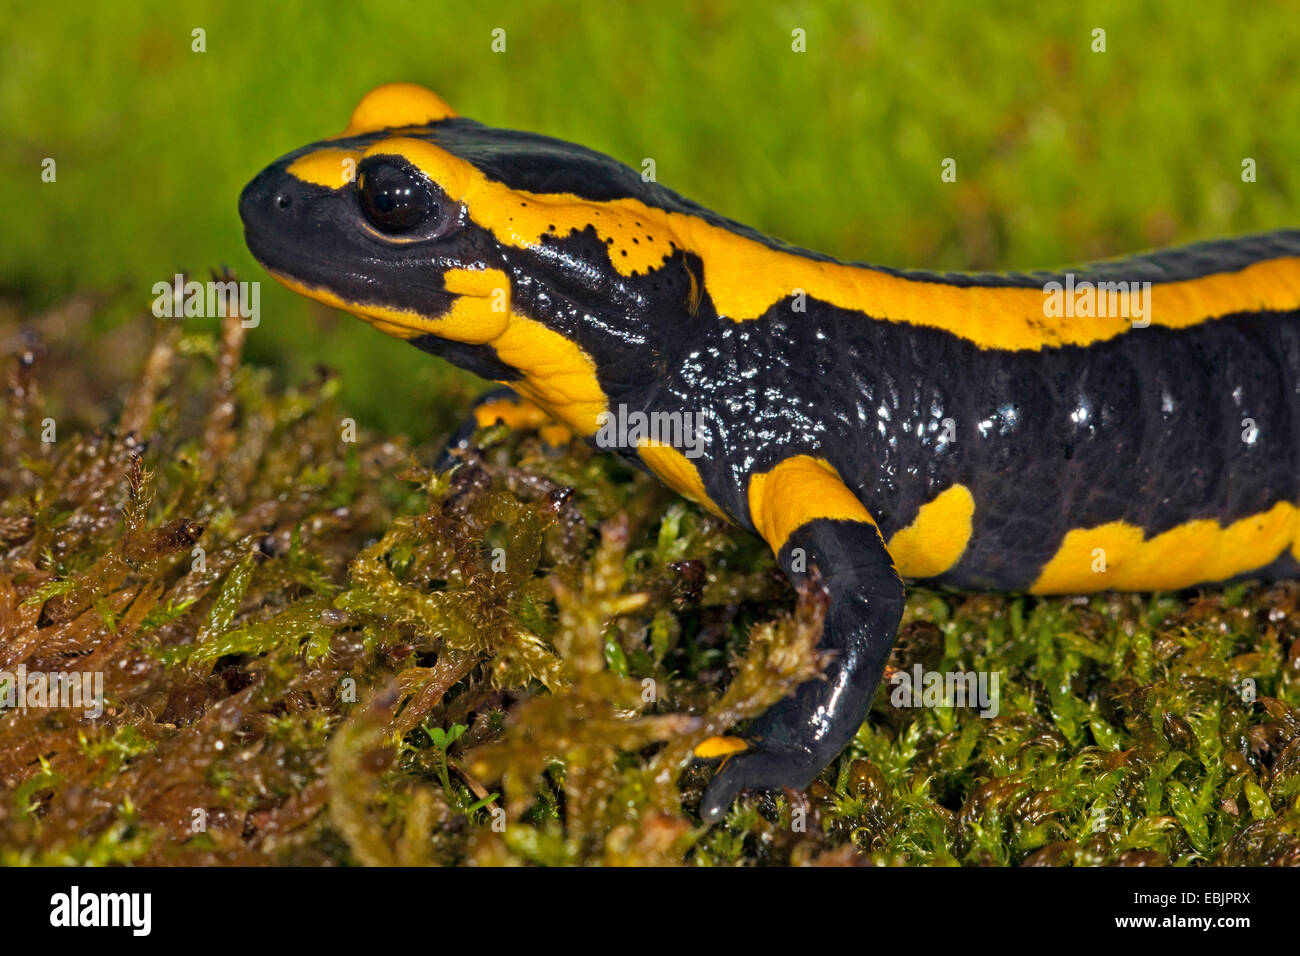 European fire salamander (Salamandra salamandra terrestris), portrait, side view Stock Photo